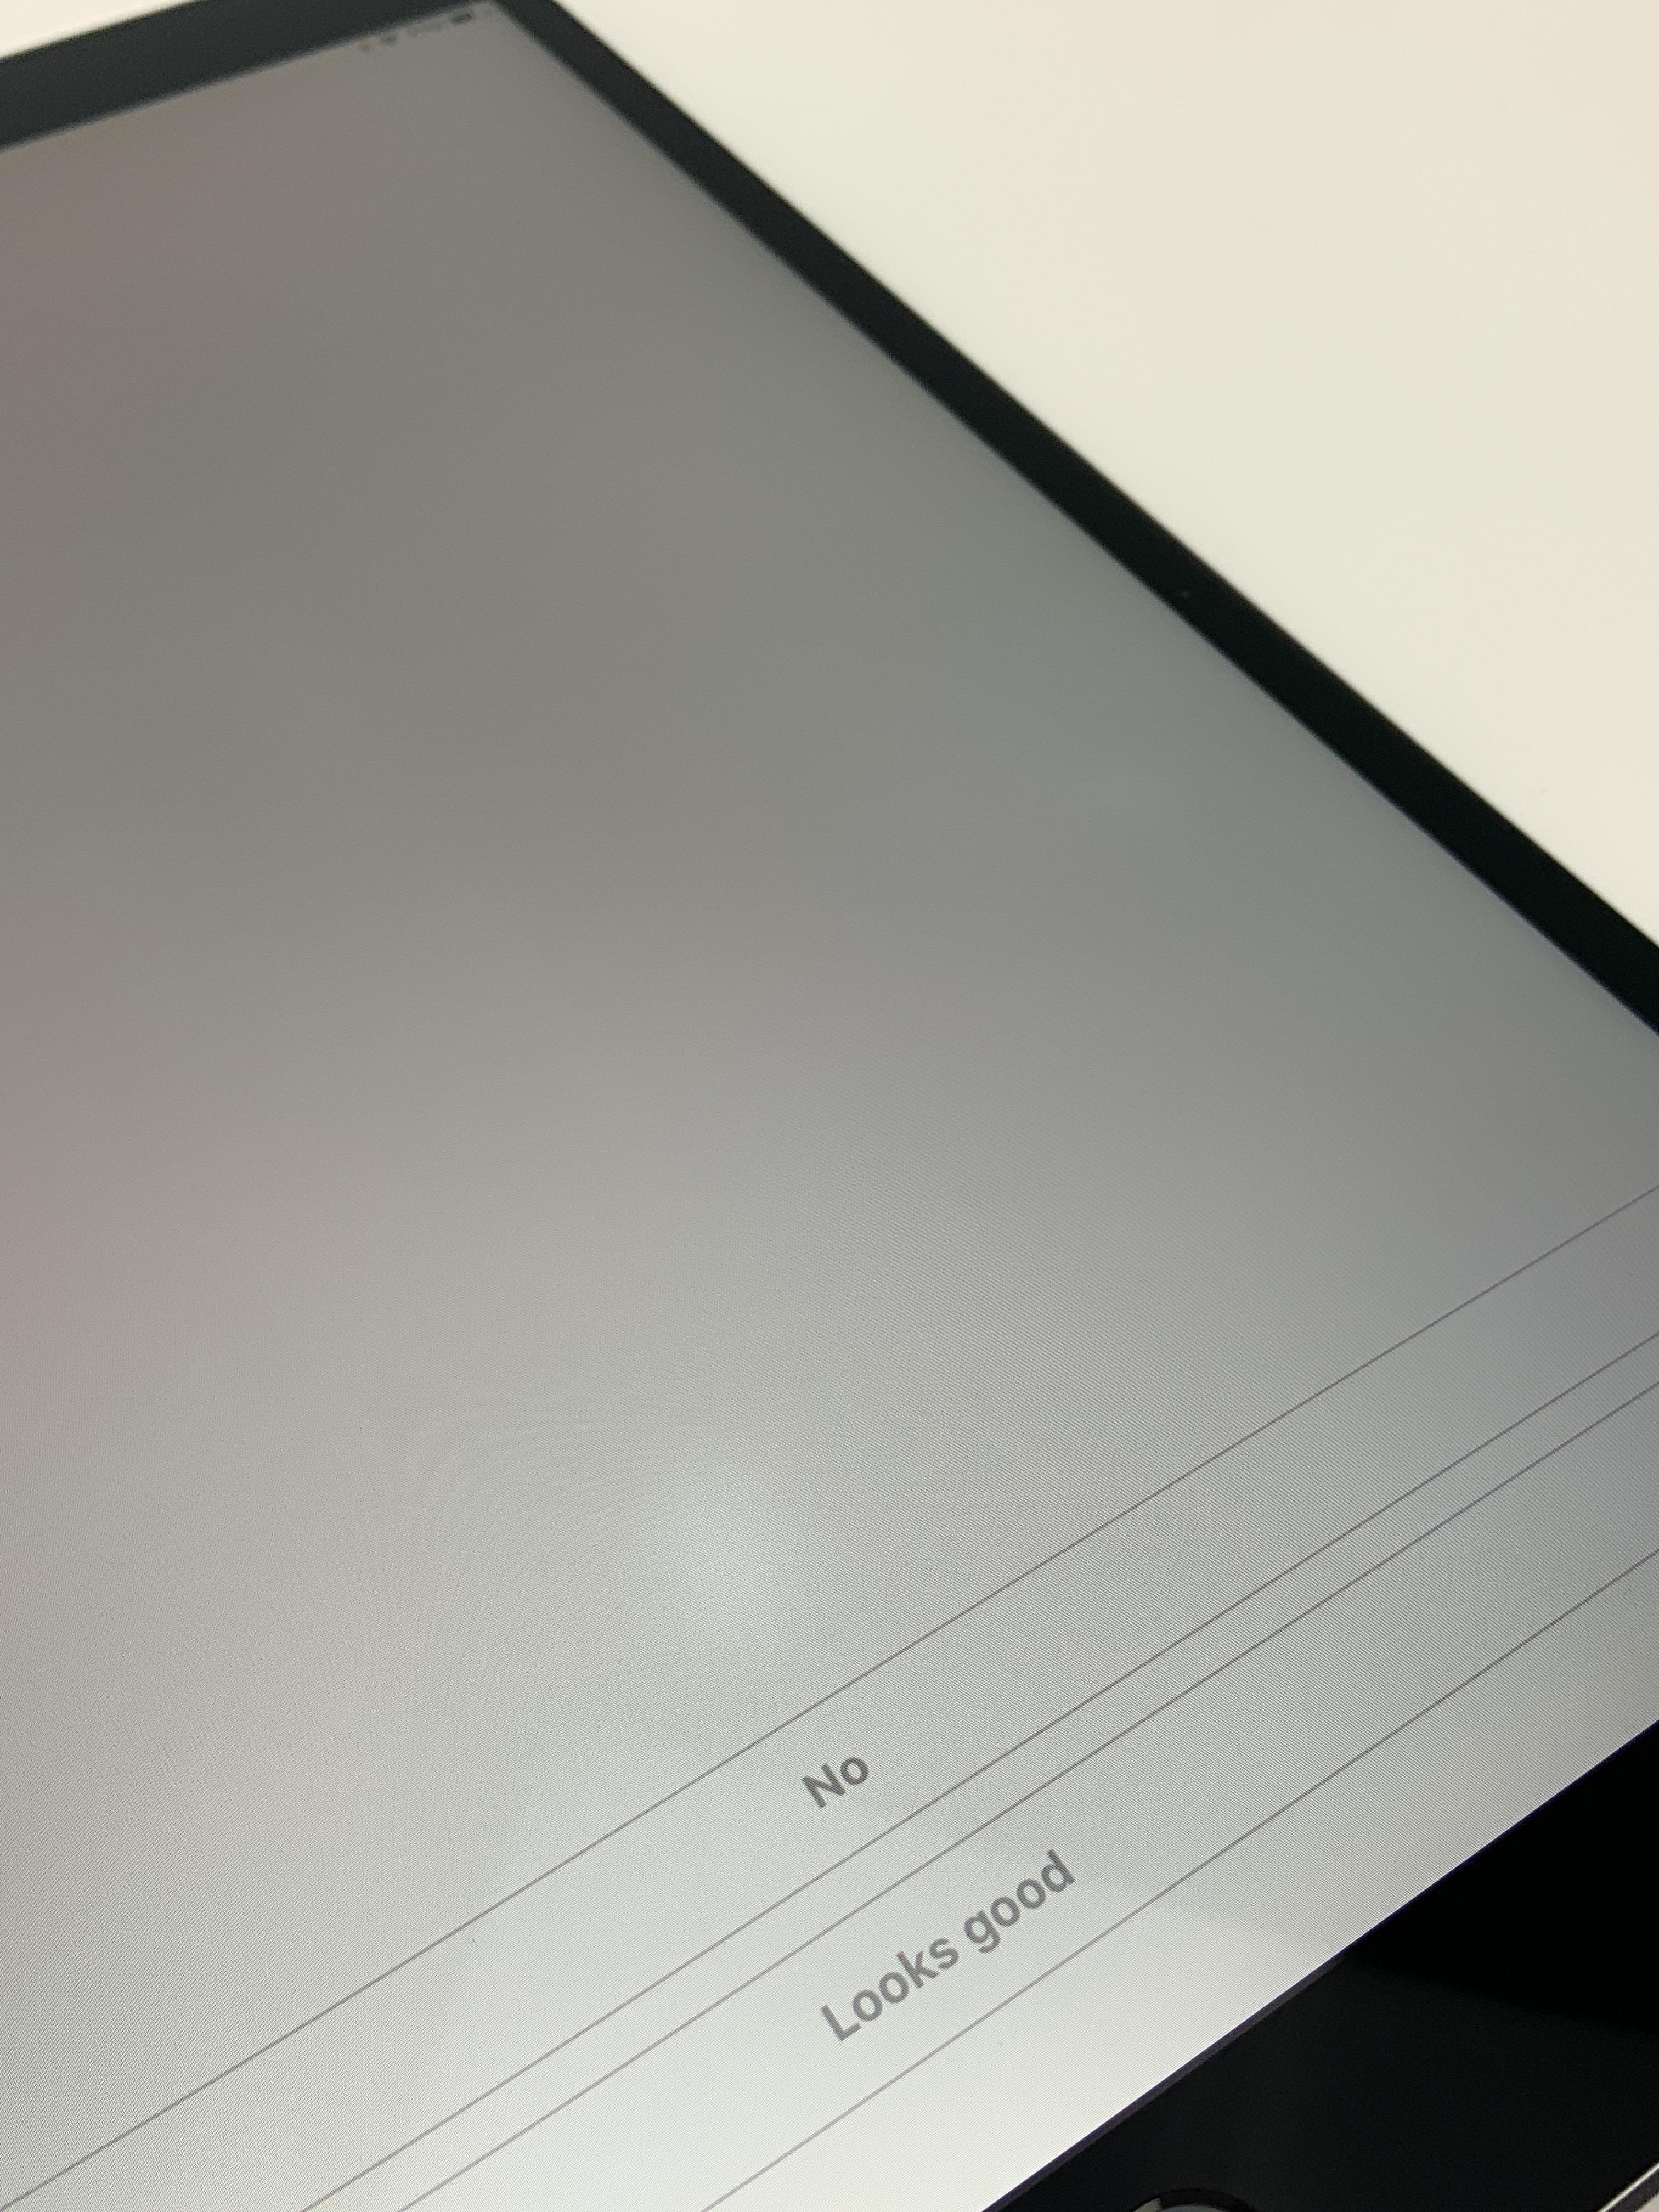 iPad Pro 10.5" Wi-Fi + Cellular 256GB, 256GB, Space Gray, bild 4